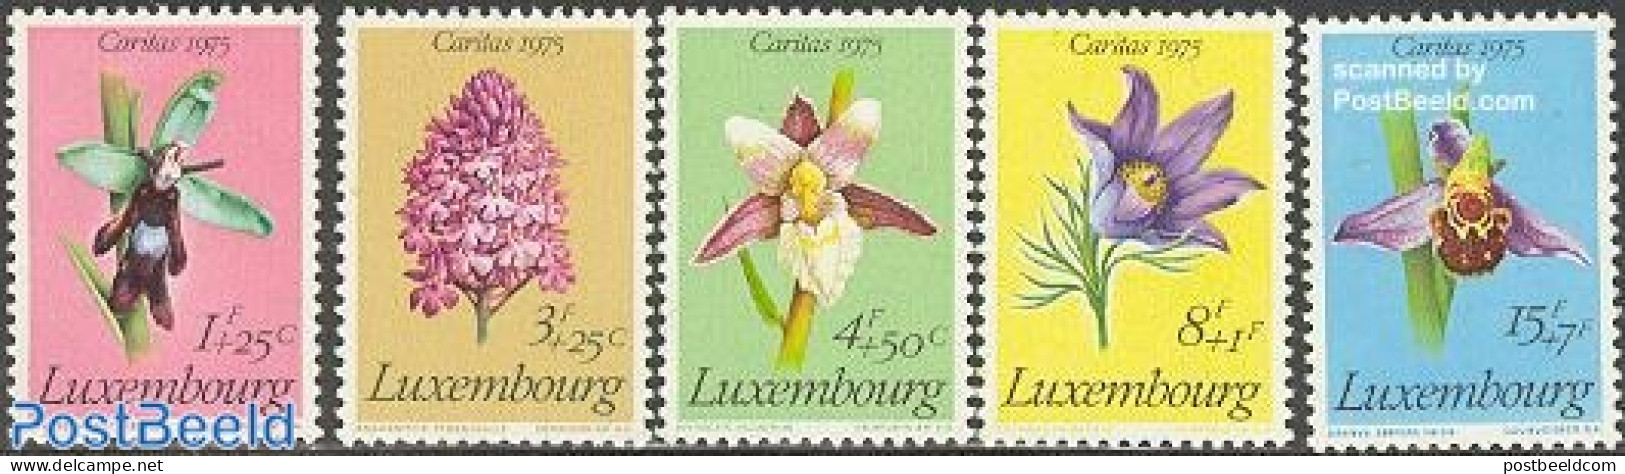 Luxemburg 1975 Caritas, Flowers 5v, Mint NH, Nature - Flowers & Plants - Unused Stamps